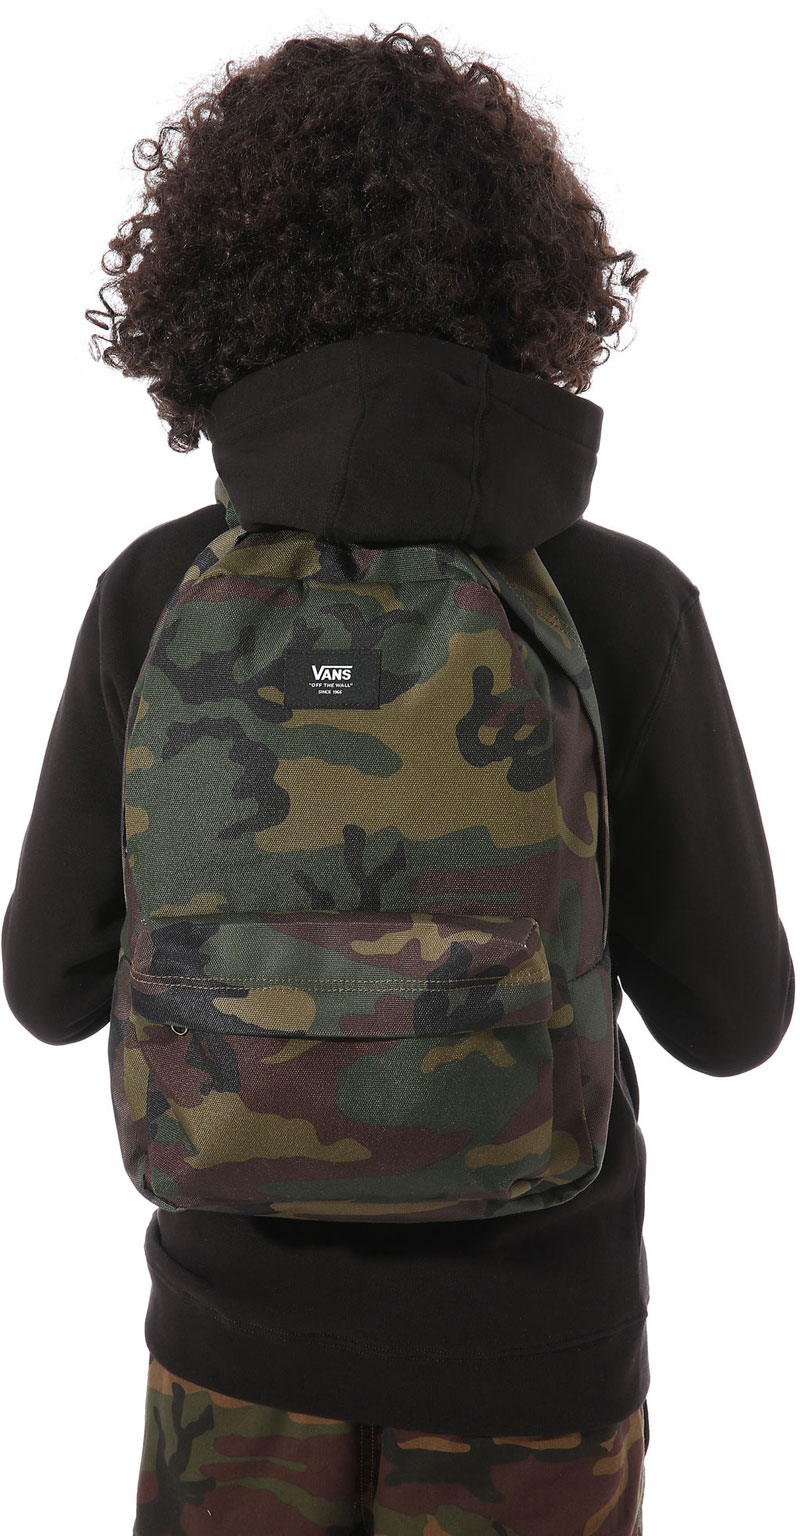 Boys’ backpack